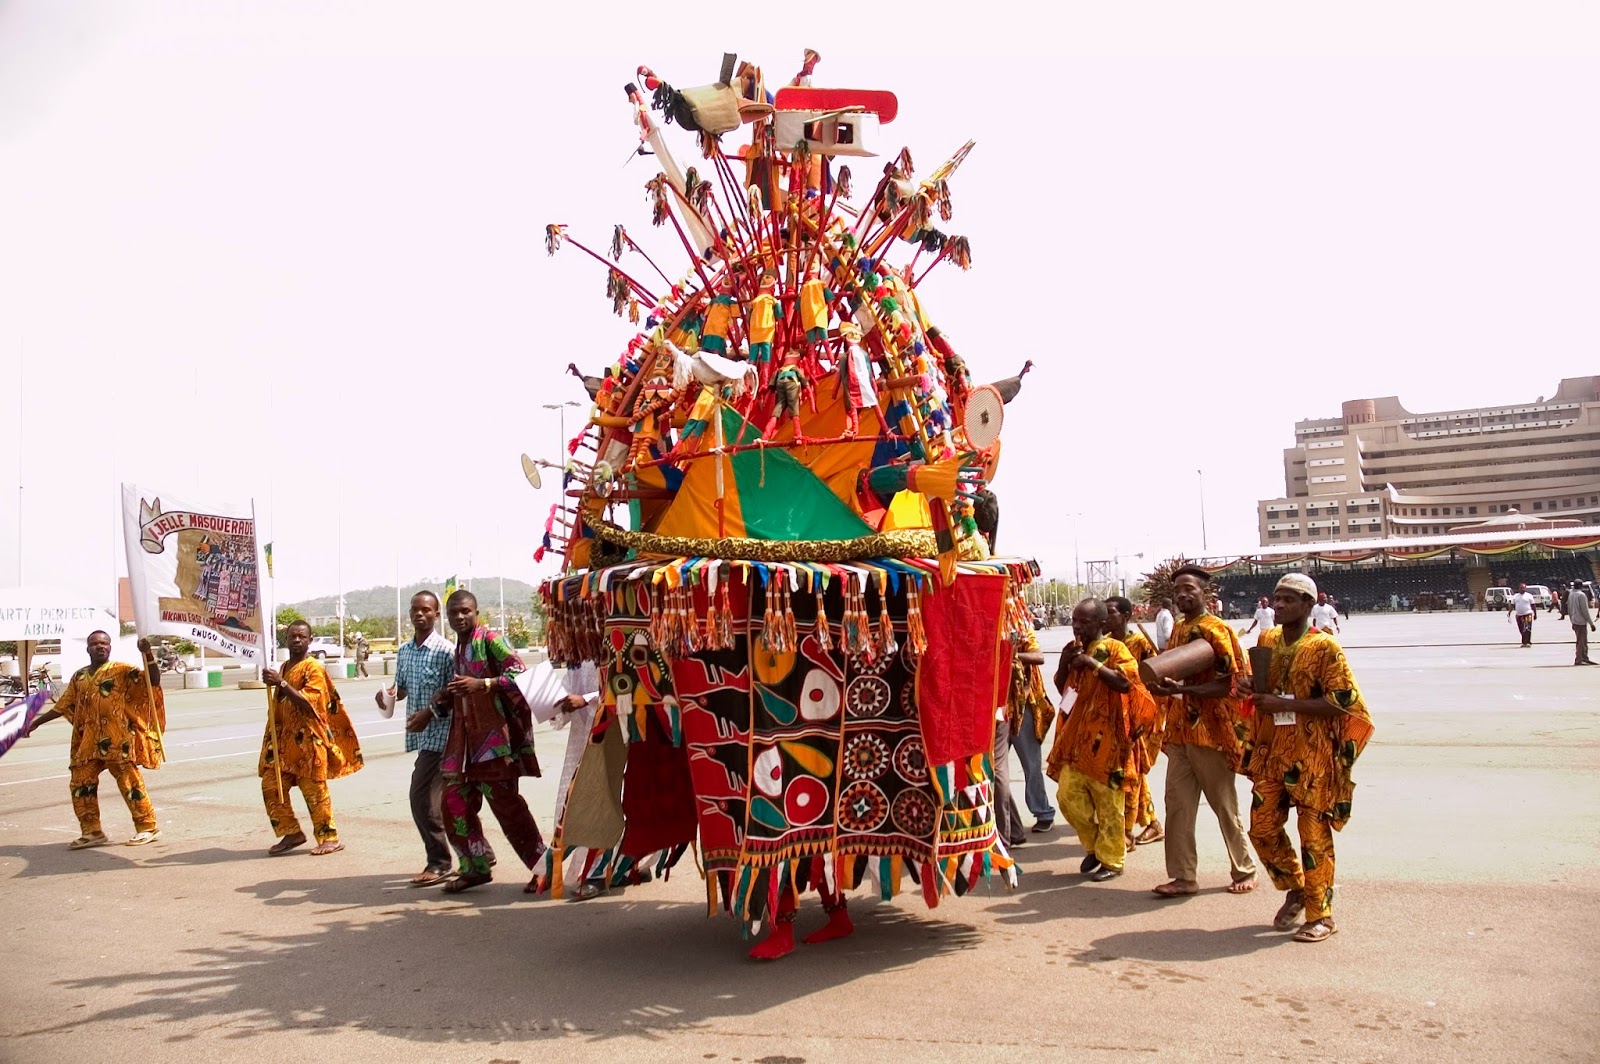 ijele-masquerade-from-enugu-state.jpg